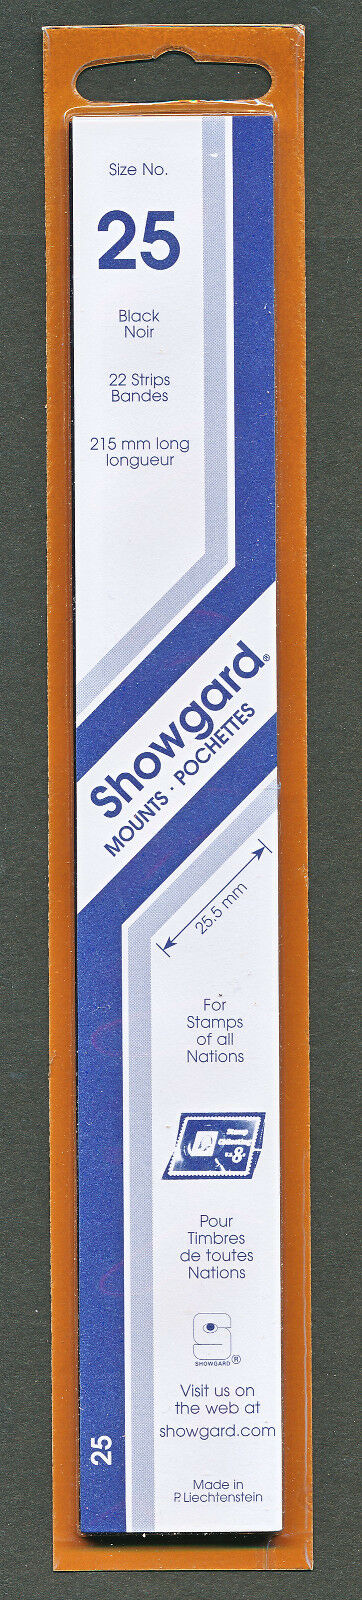 Showgard Stamp Mount Size 25/215 Mm - Black (pack Of 22) (25x215  25mm) Strip